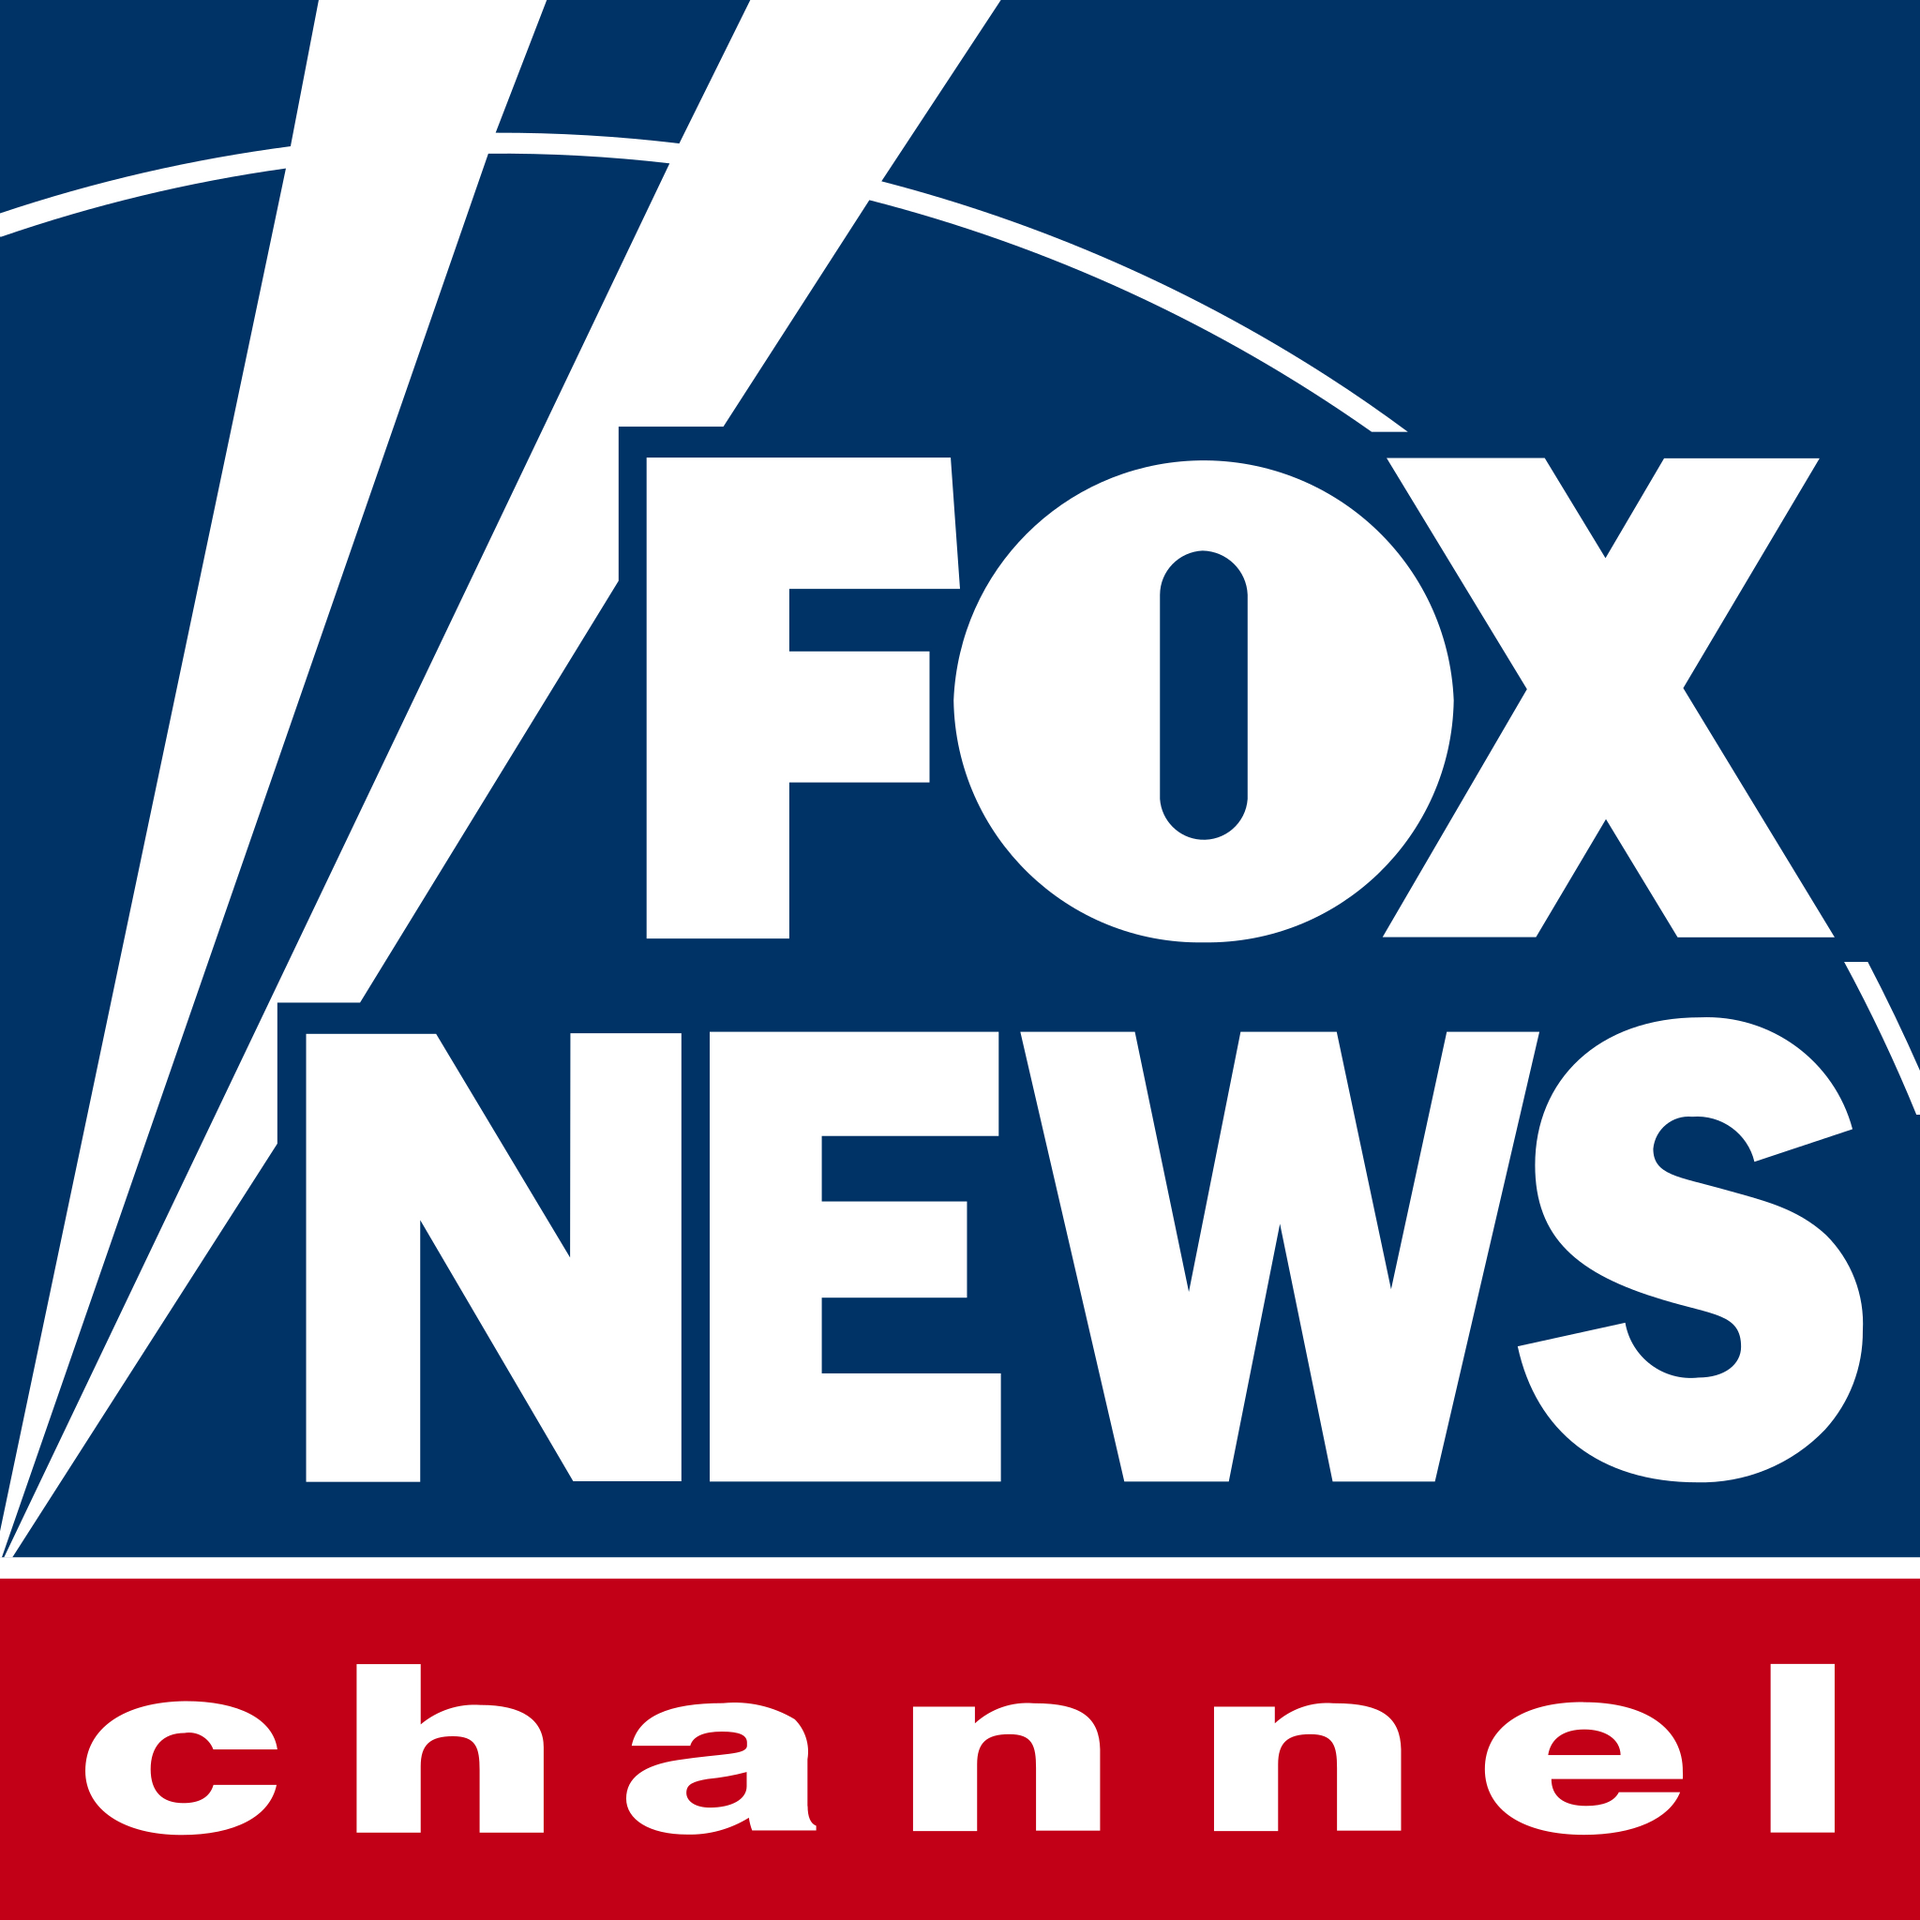 Fox news channel logo on a blue background